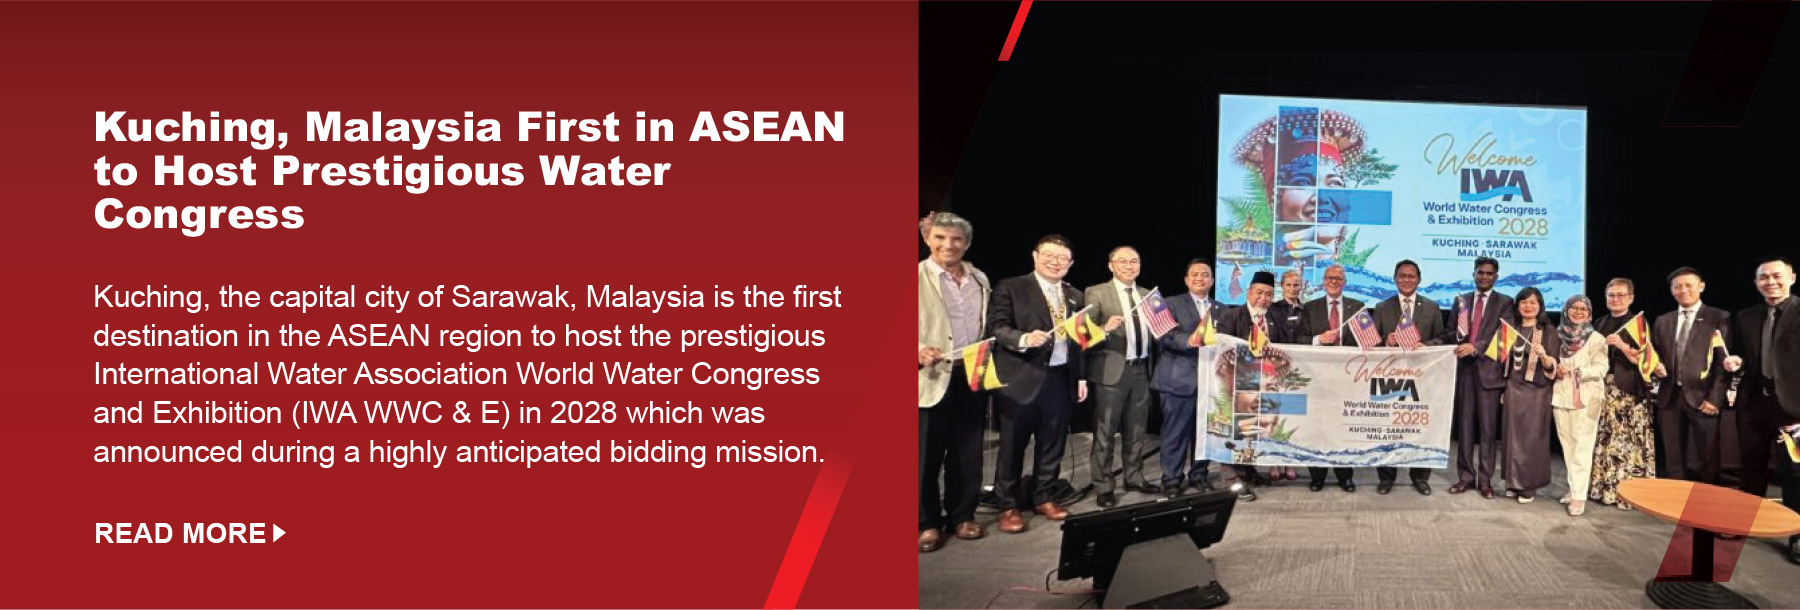 Kuching, Malaysia First in ASEAN to Host Prestigious Water Congress